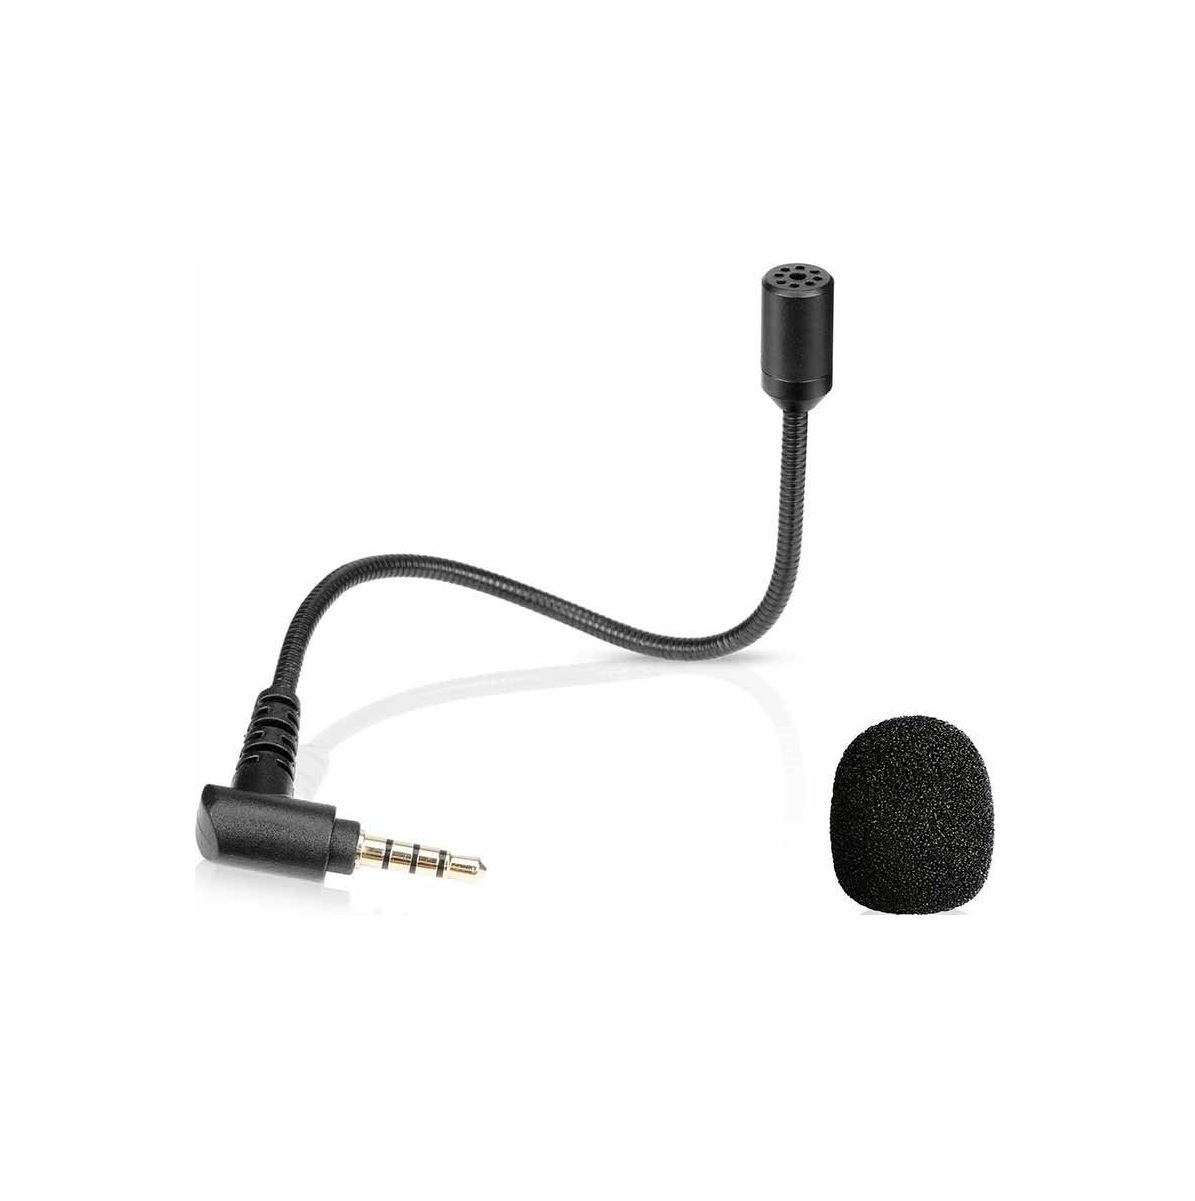 میکروفون منعطف بویا BOYA BY-M40D Flexible Microphone